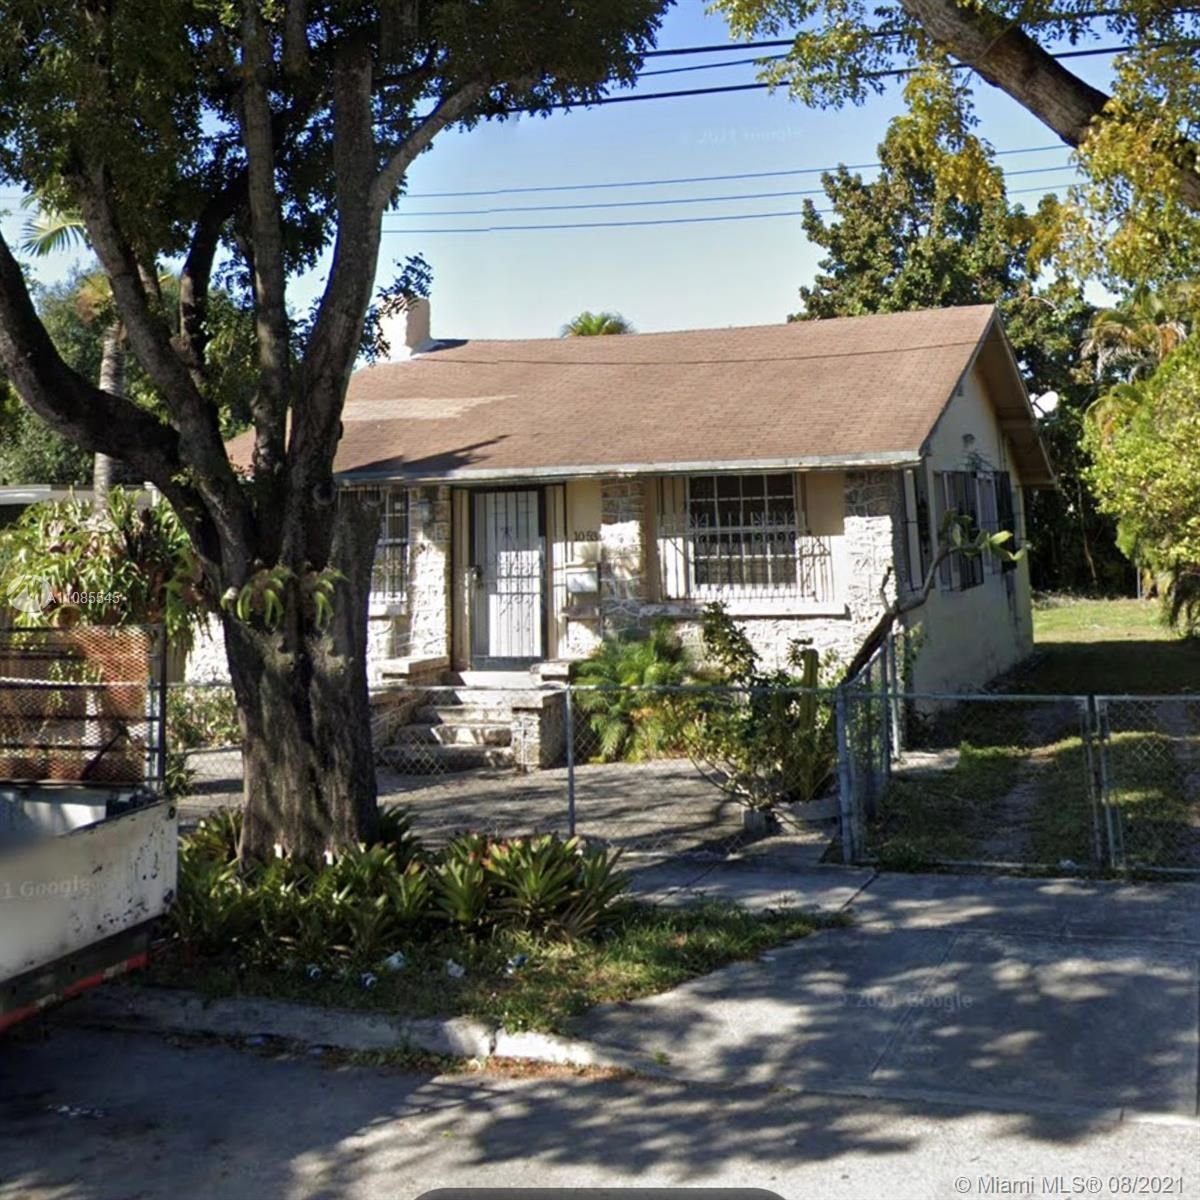 Real estate property located at 1053 28th St, Miami-Dade County, Miami, FL